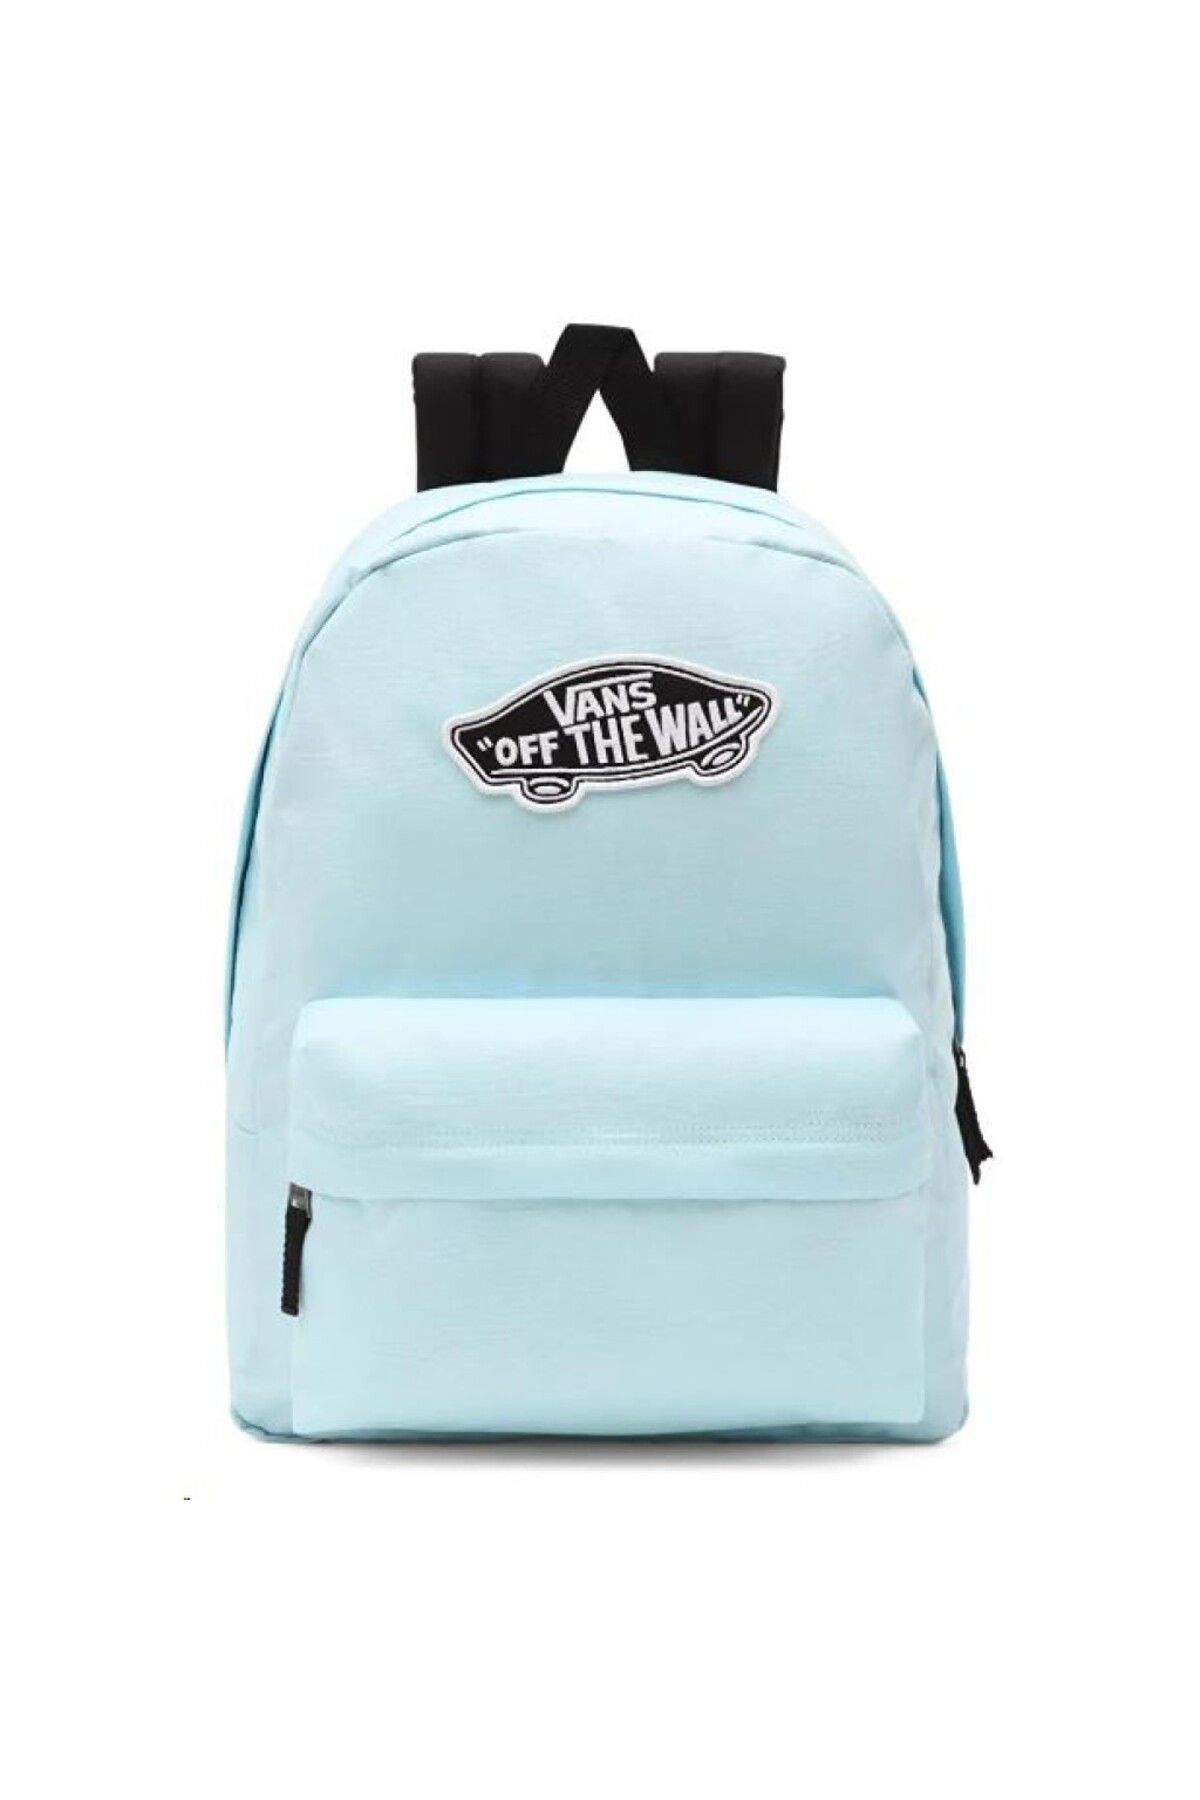 Vans Realm Backpack Blue Glow Vn0a3uı6g5o1